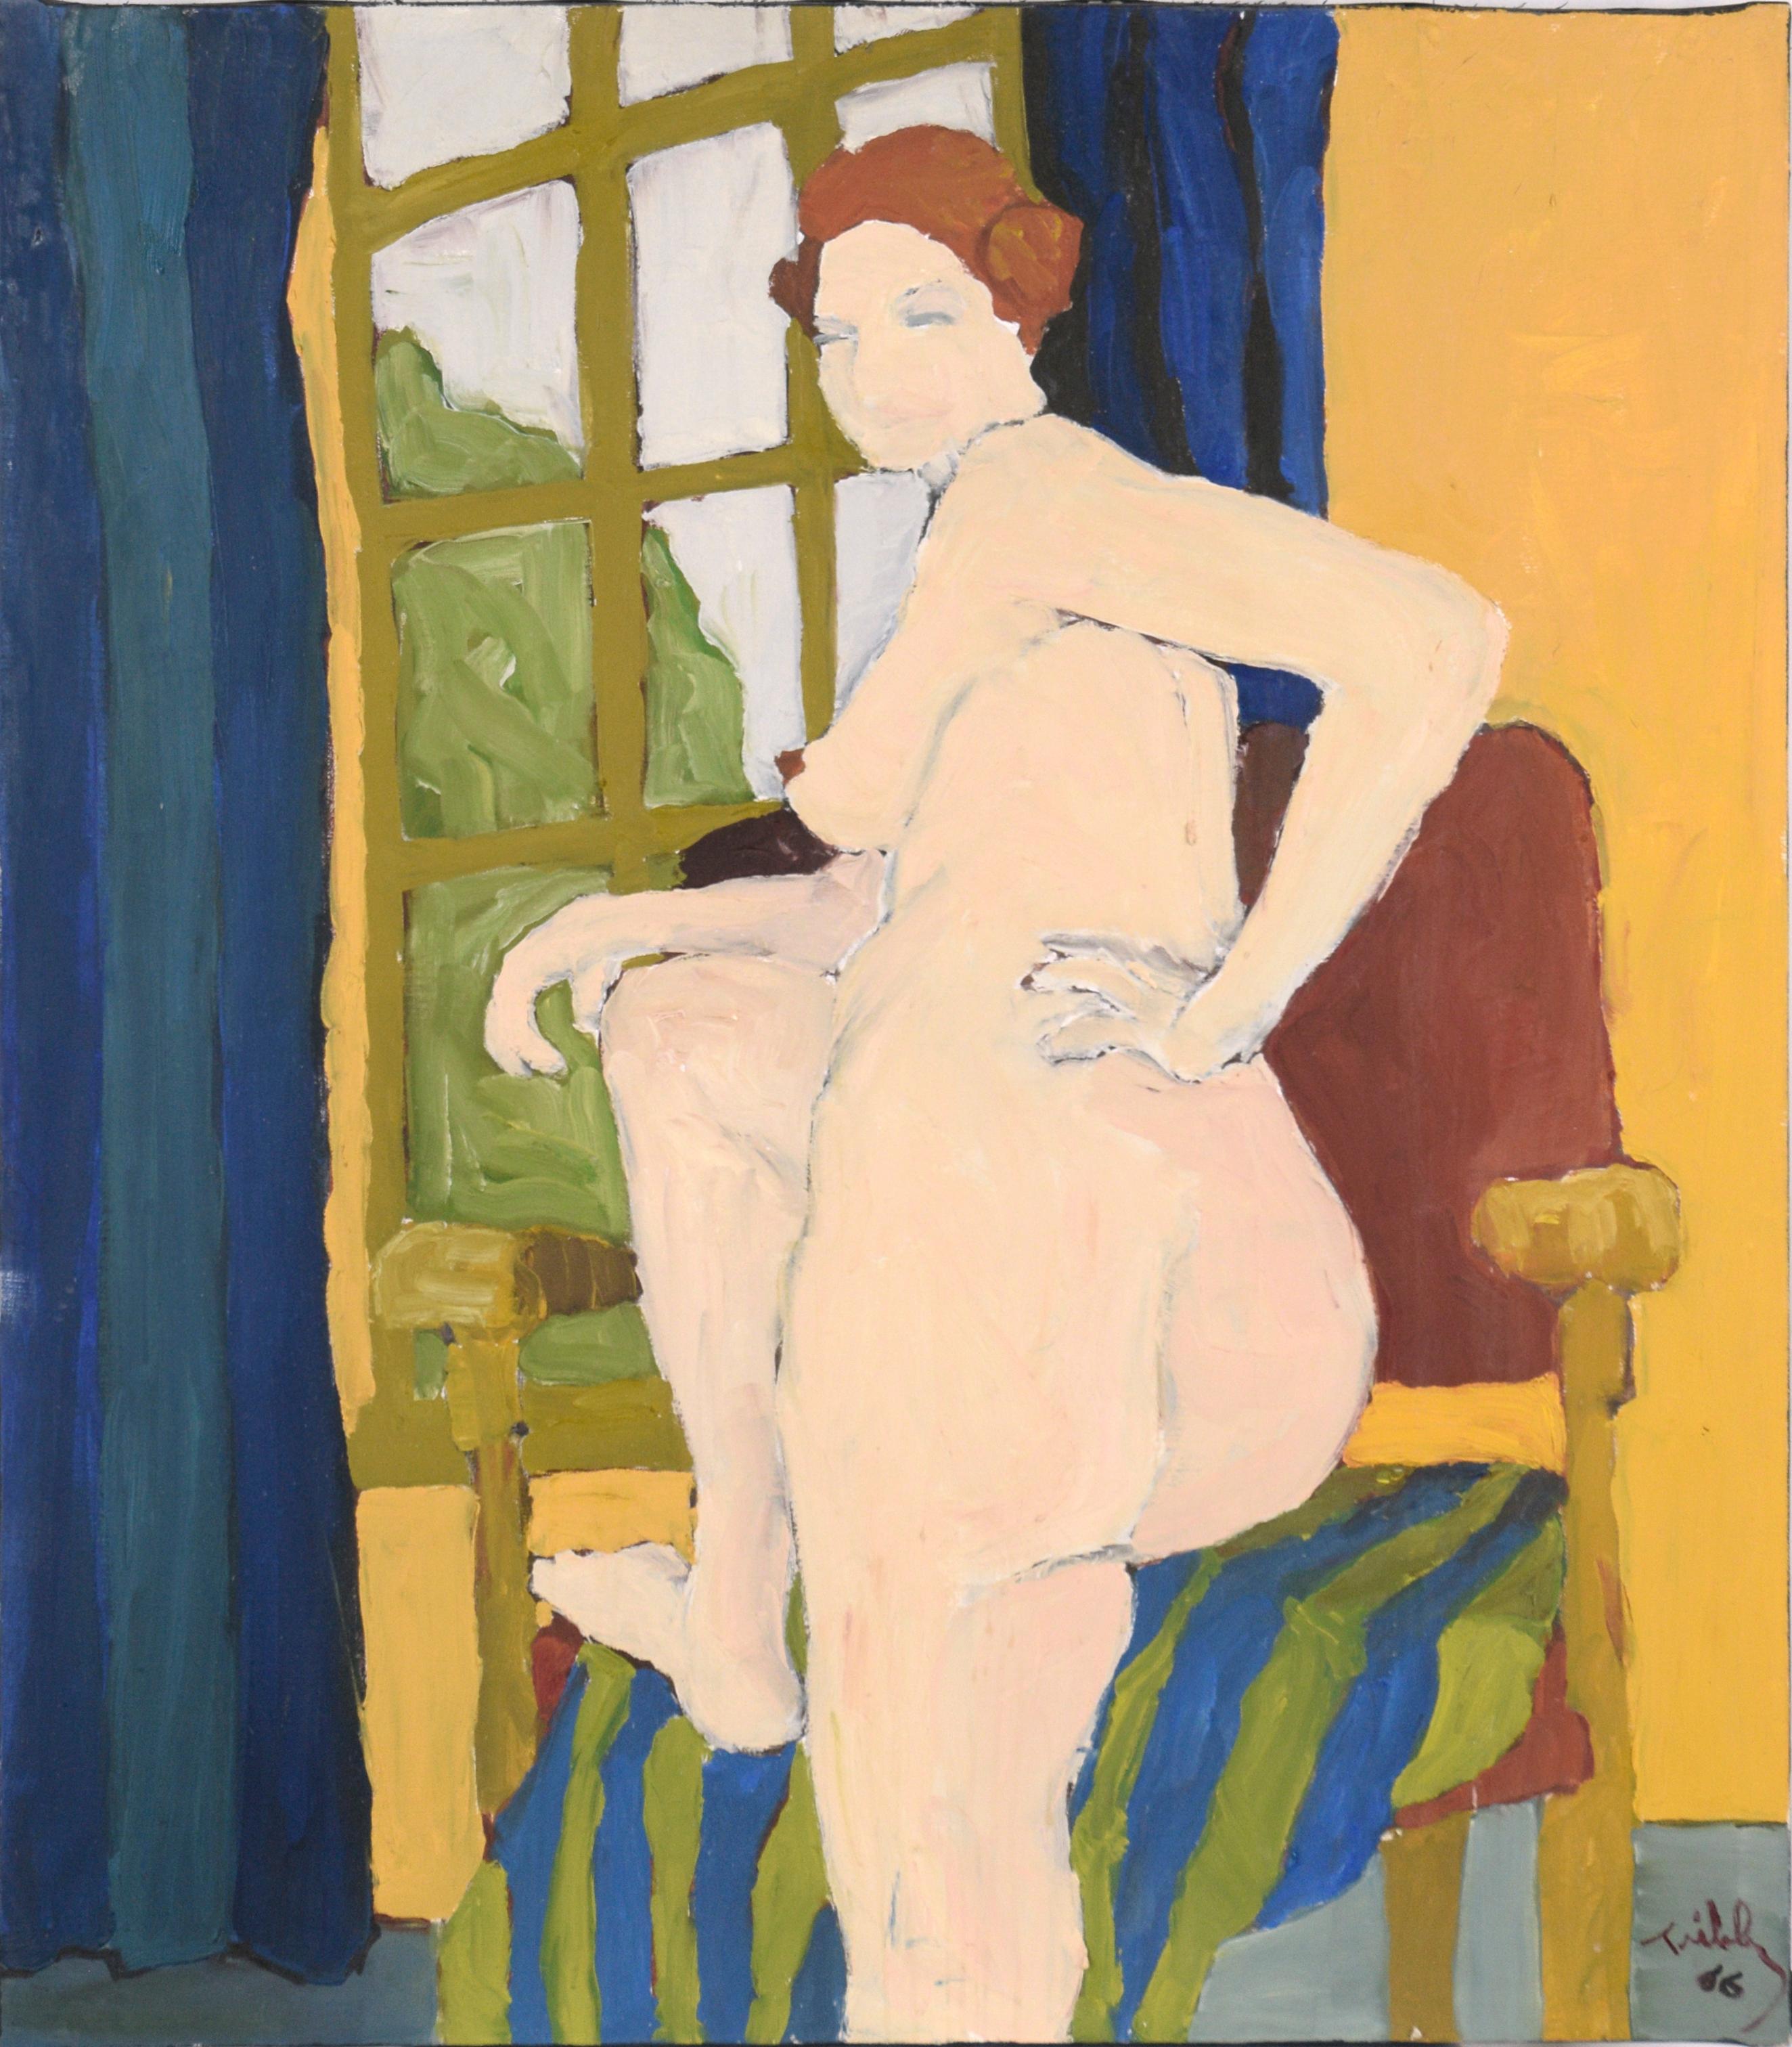 Thomas L. Tribby Nude Painting – Akt am Fenster, San Francisco Bay Area Figurative Bewegung 1966